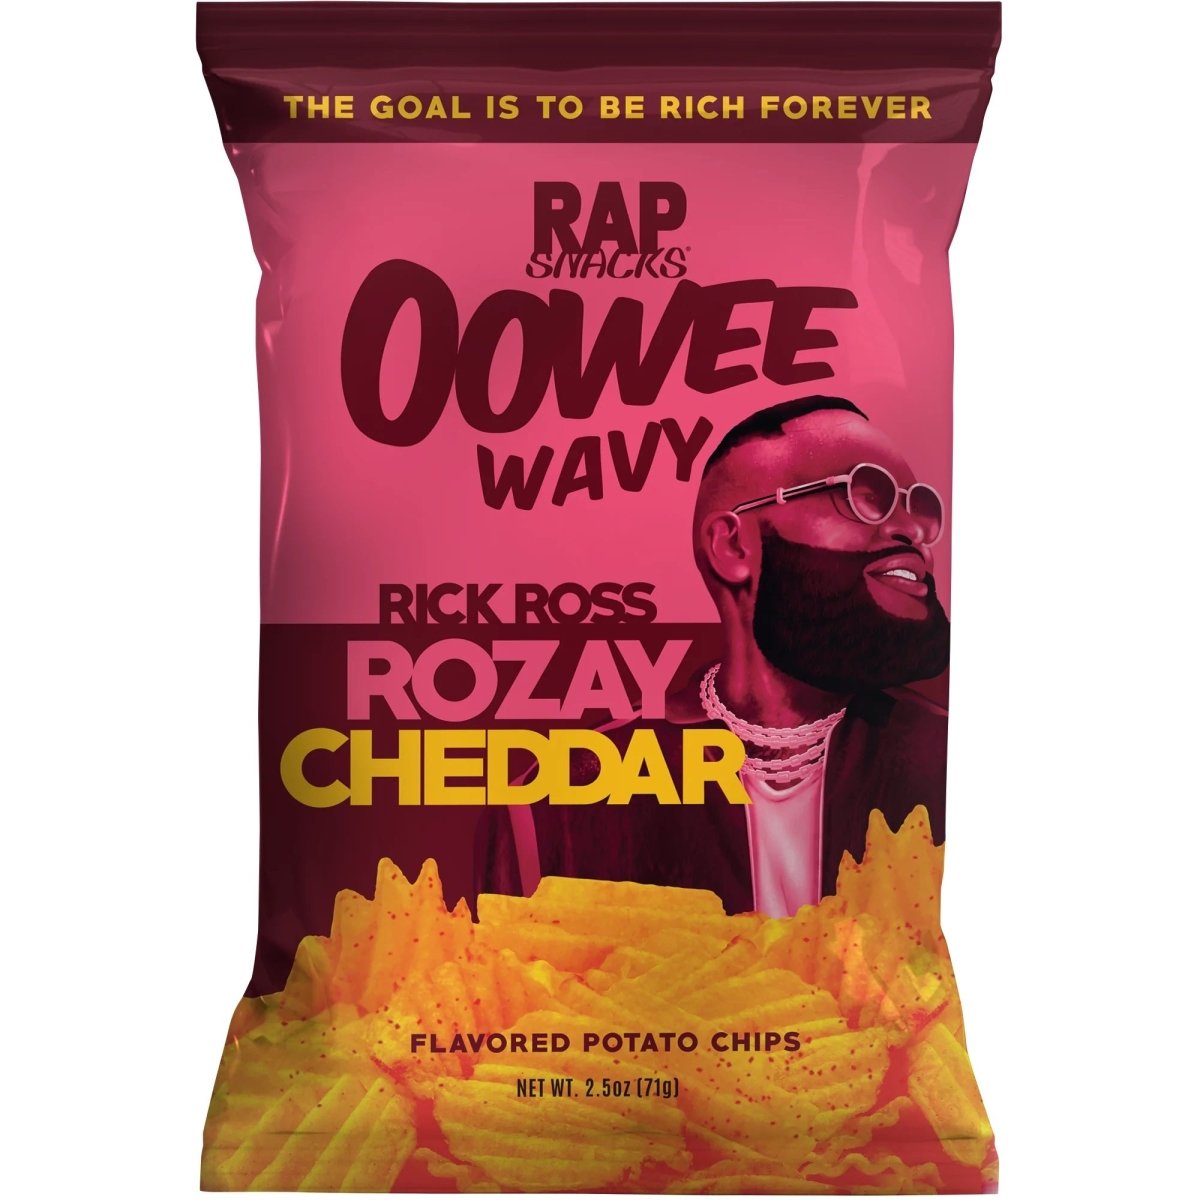 Rap Snacks Oowee Wavy Rick Ross Rozay Cheddar 71g - Candy Mail UK